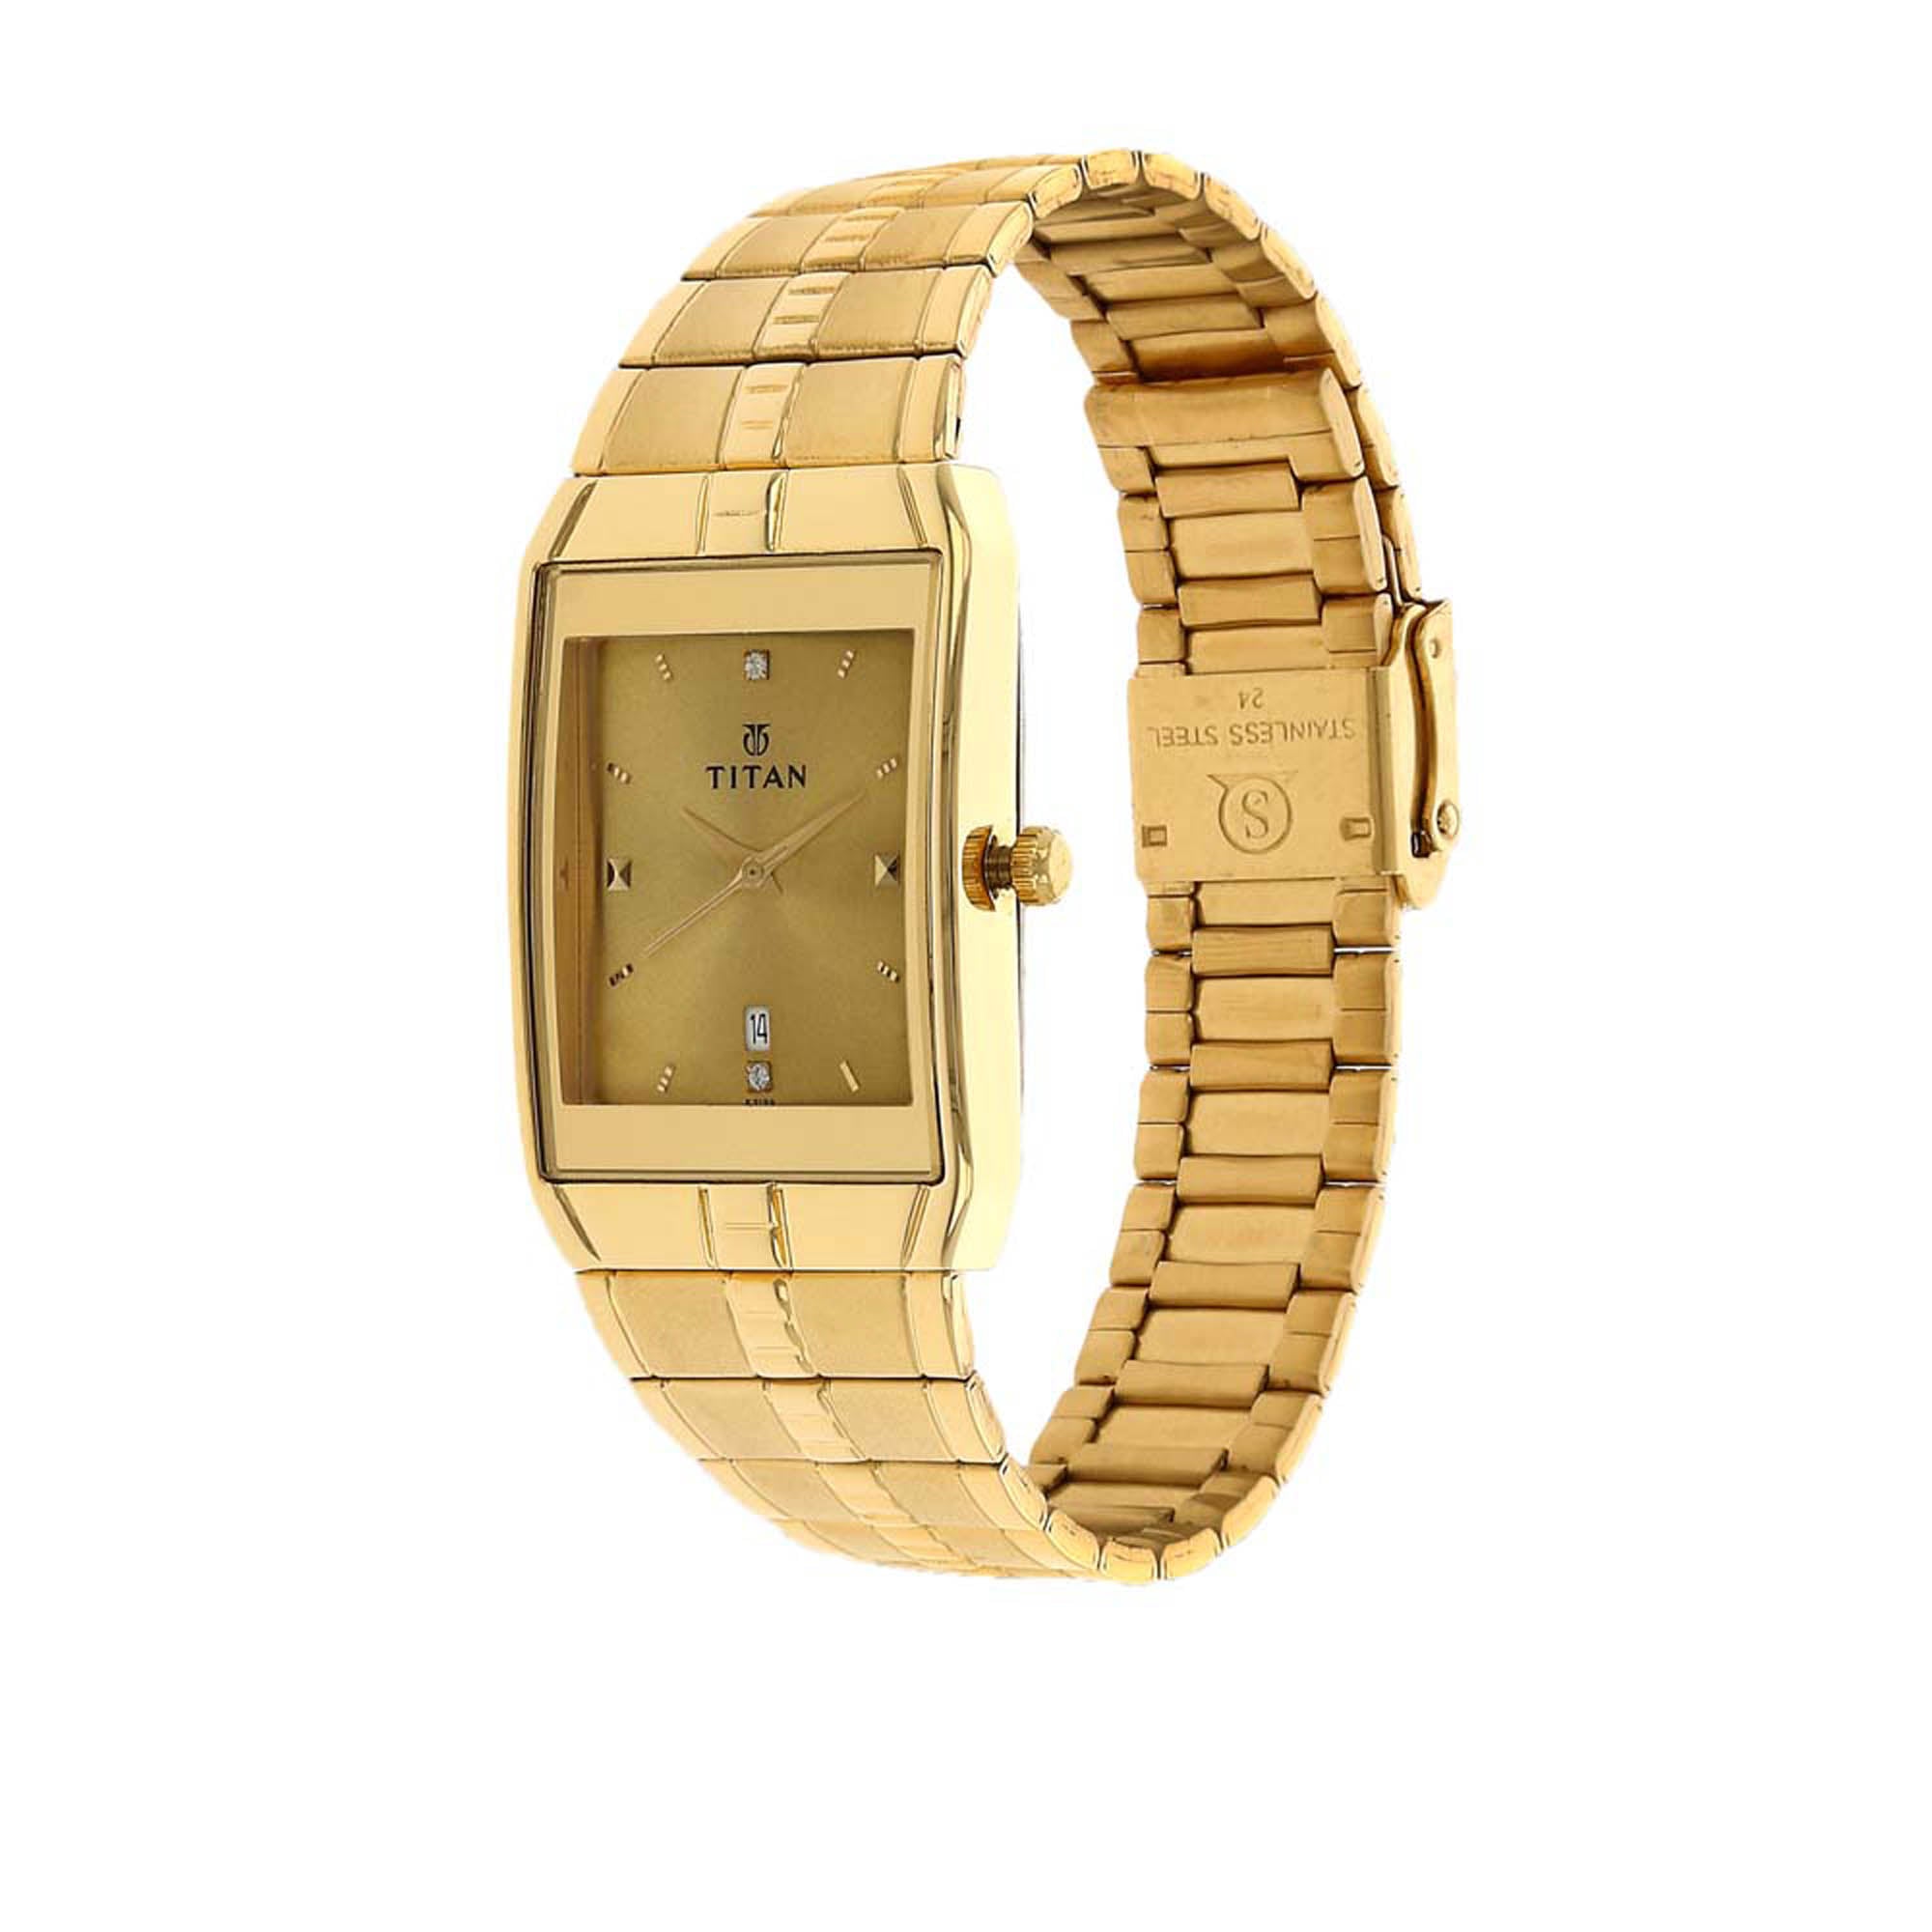 Titan Golden Dial Analog with DateMetal Strap watch for Men